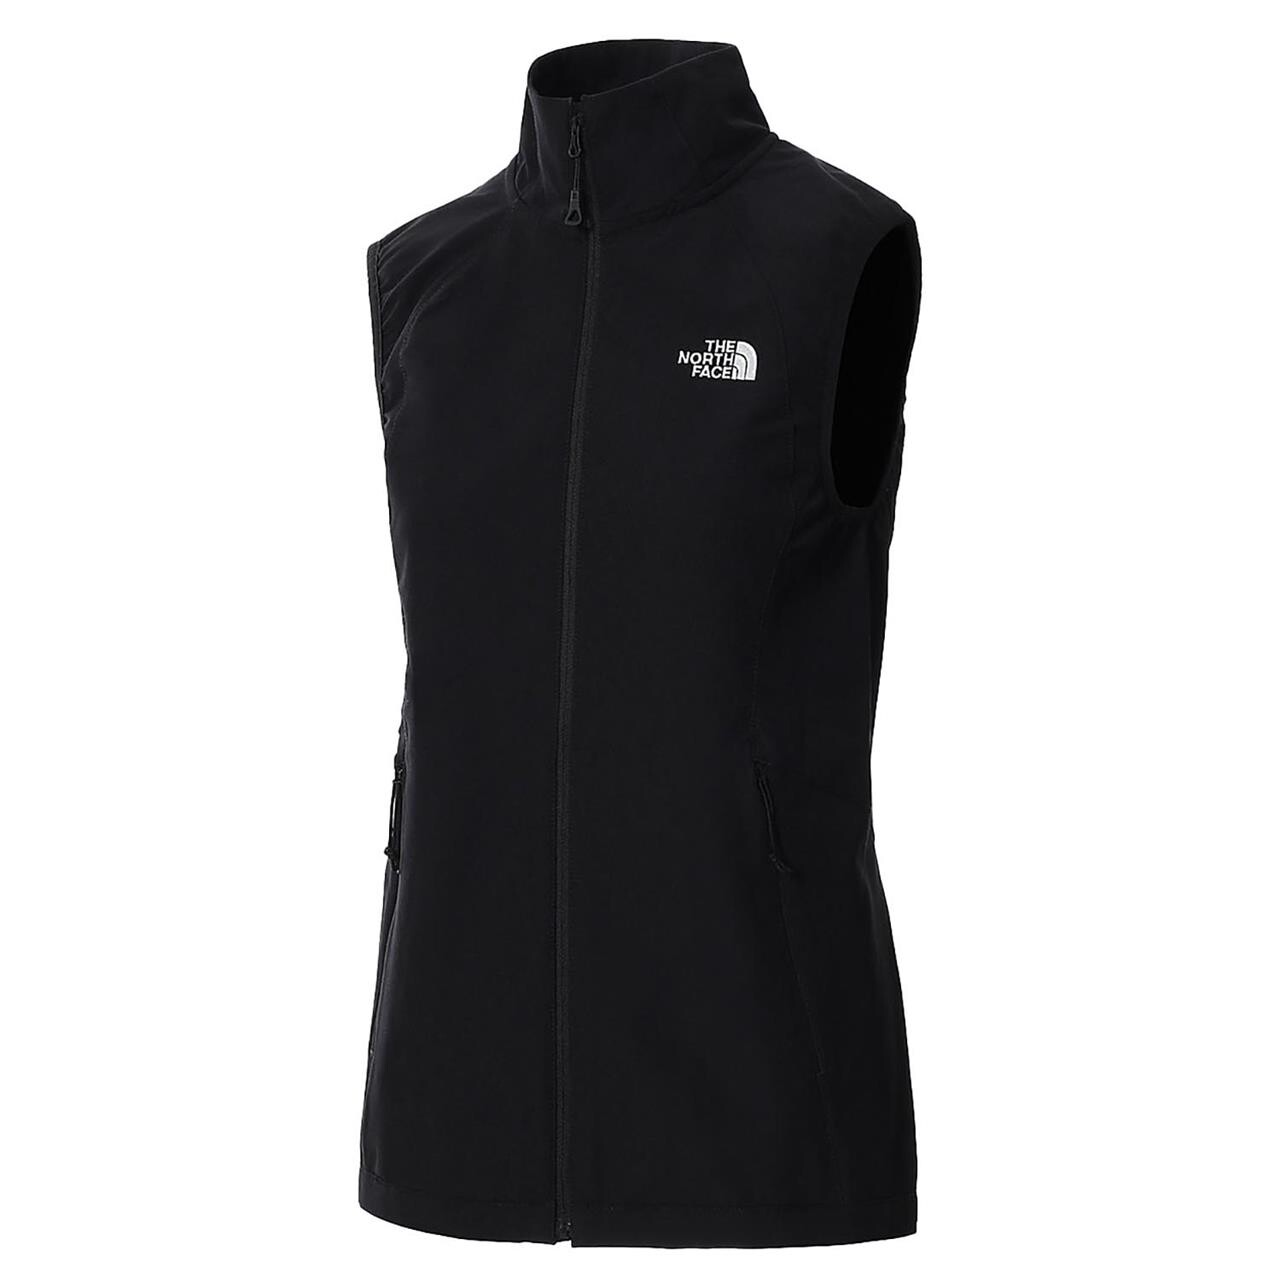 The North Face Womens Nimble Vest  (Sort (TNF BLACK) Small)